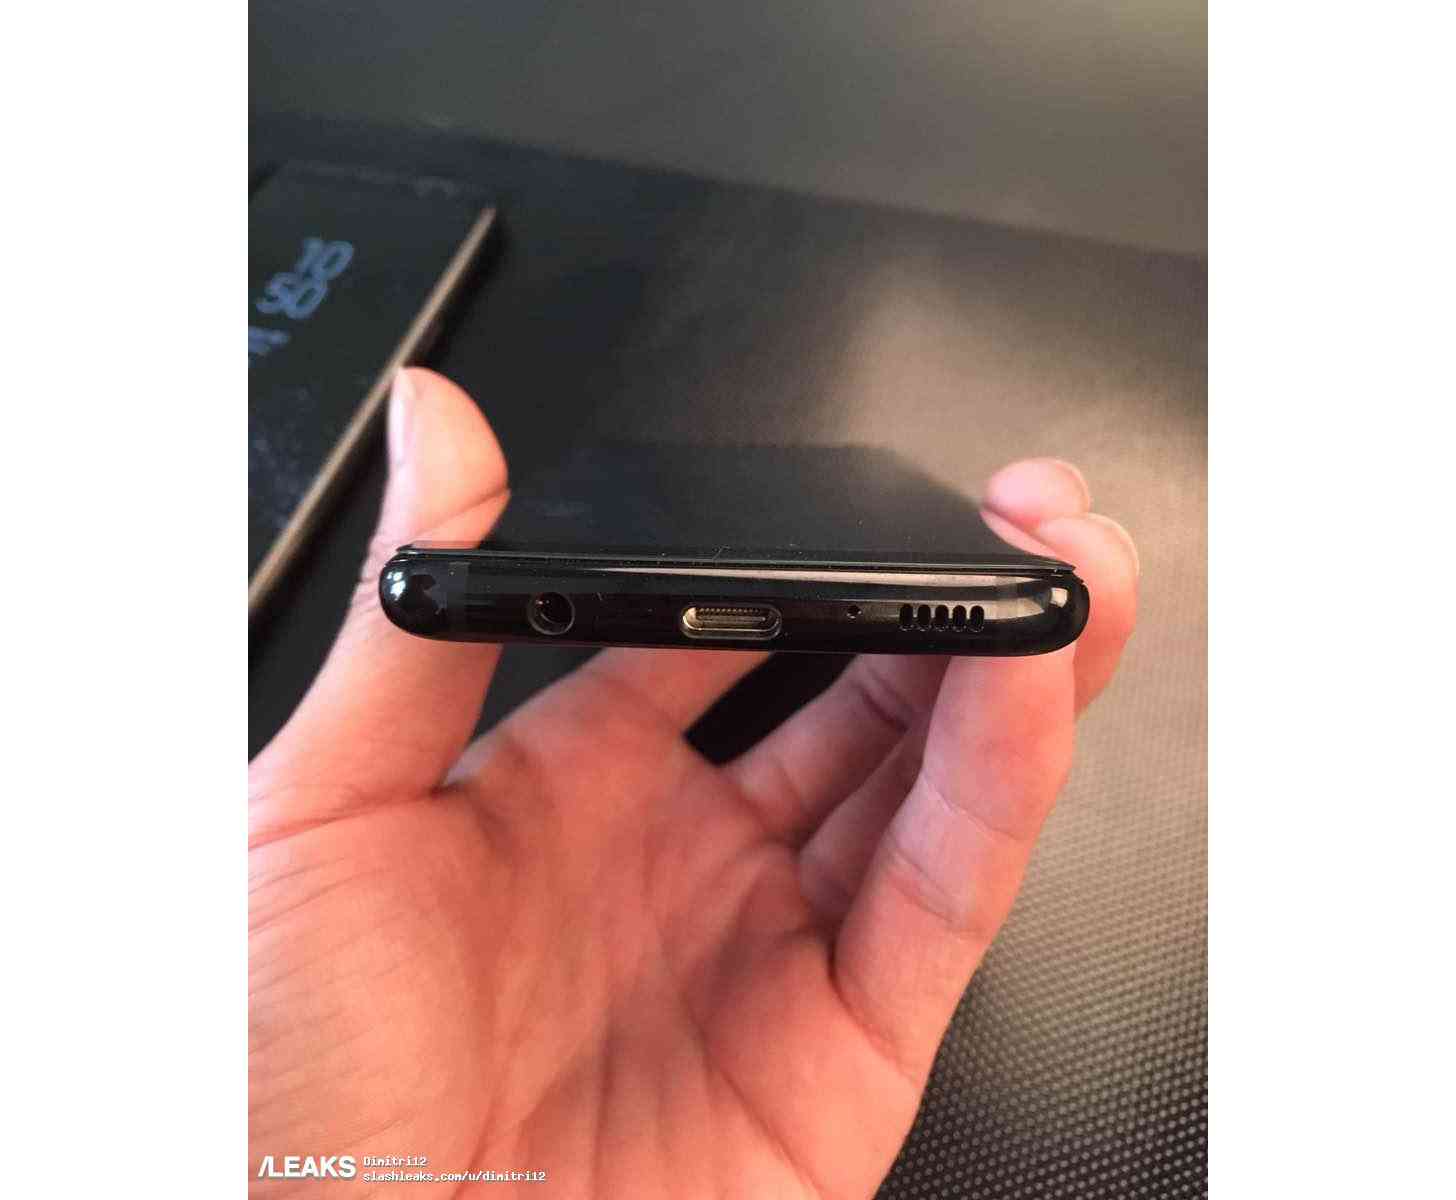 Samsung Galaxy S8 bottom photo leak